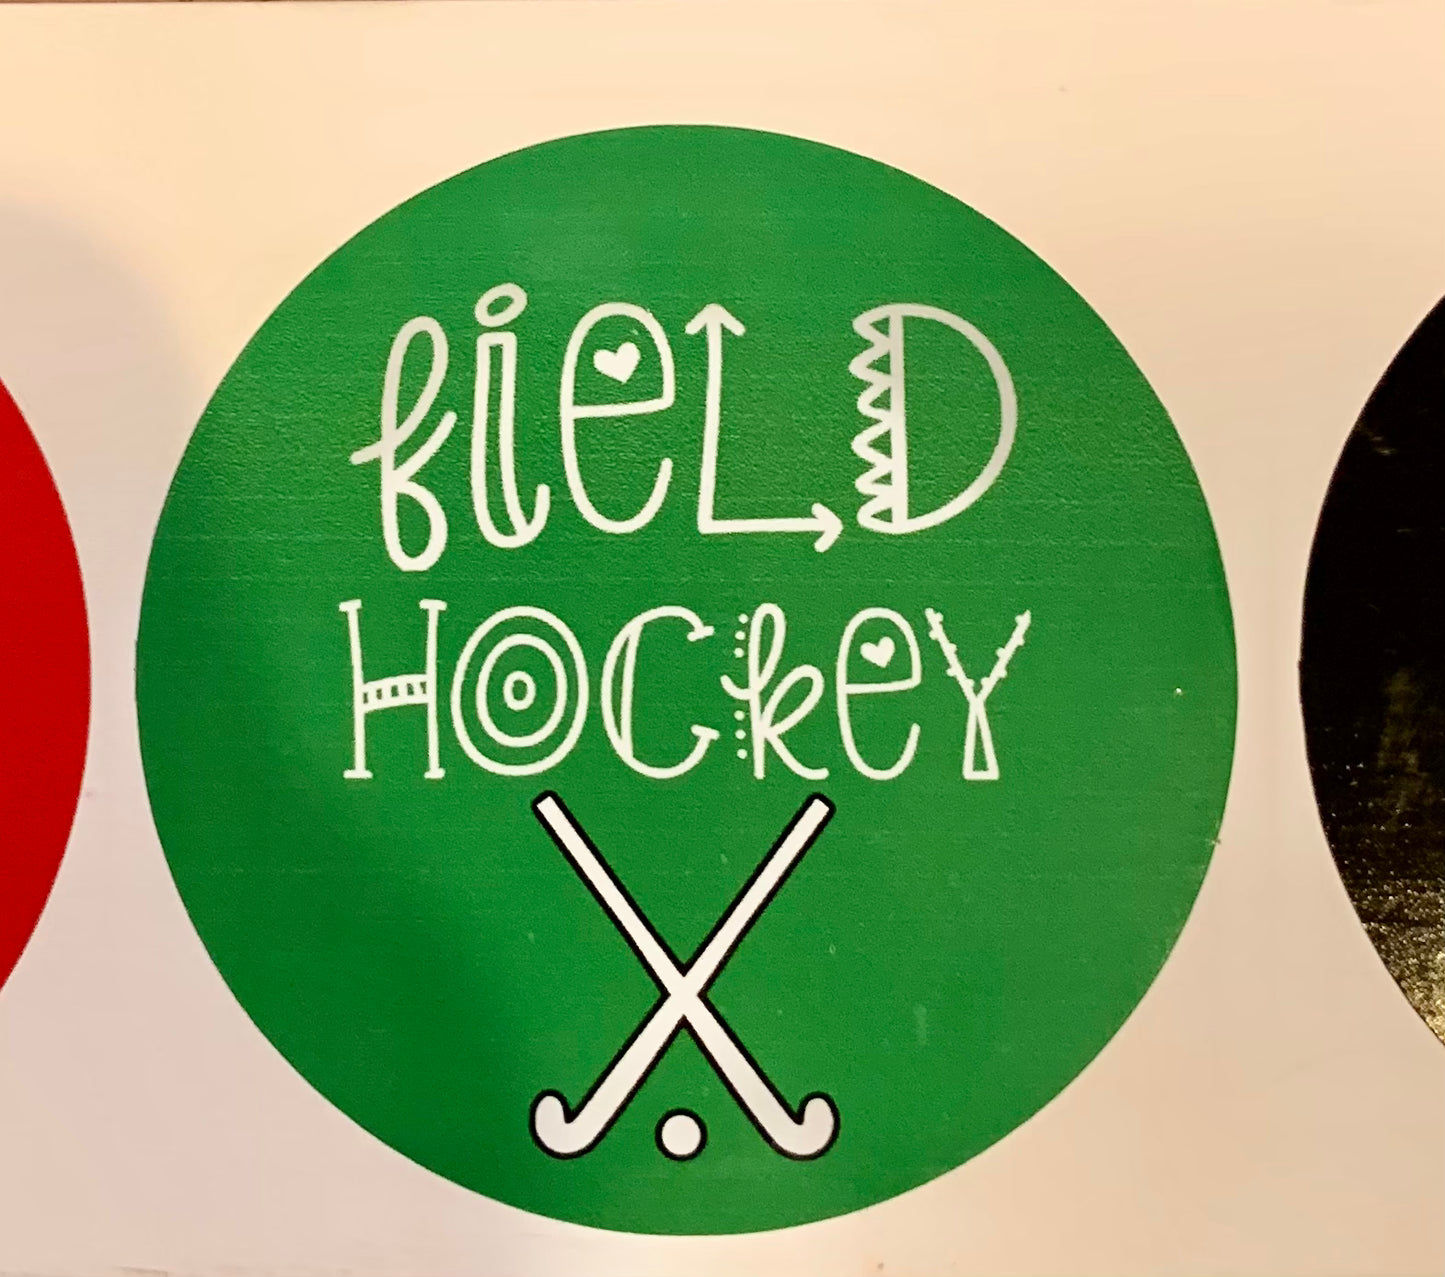 Field Hockey Sticker